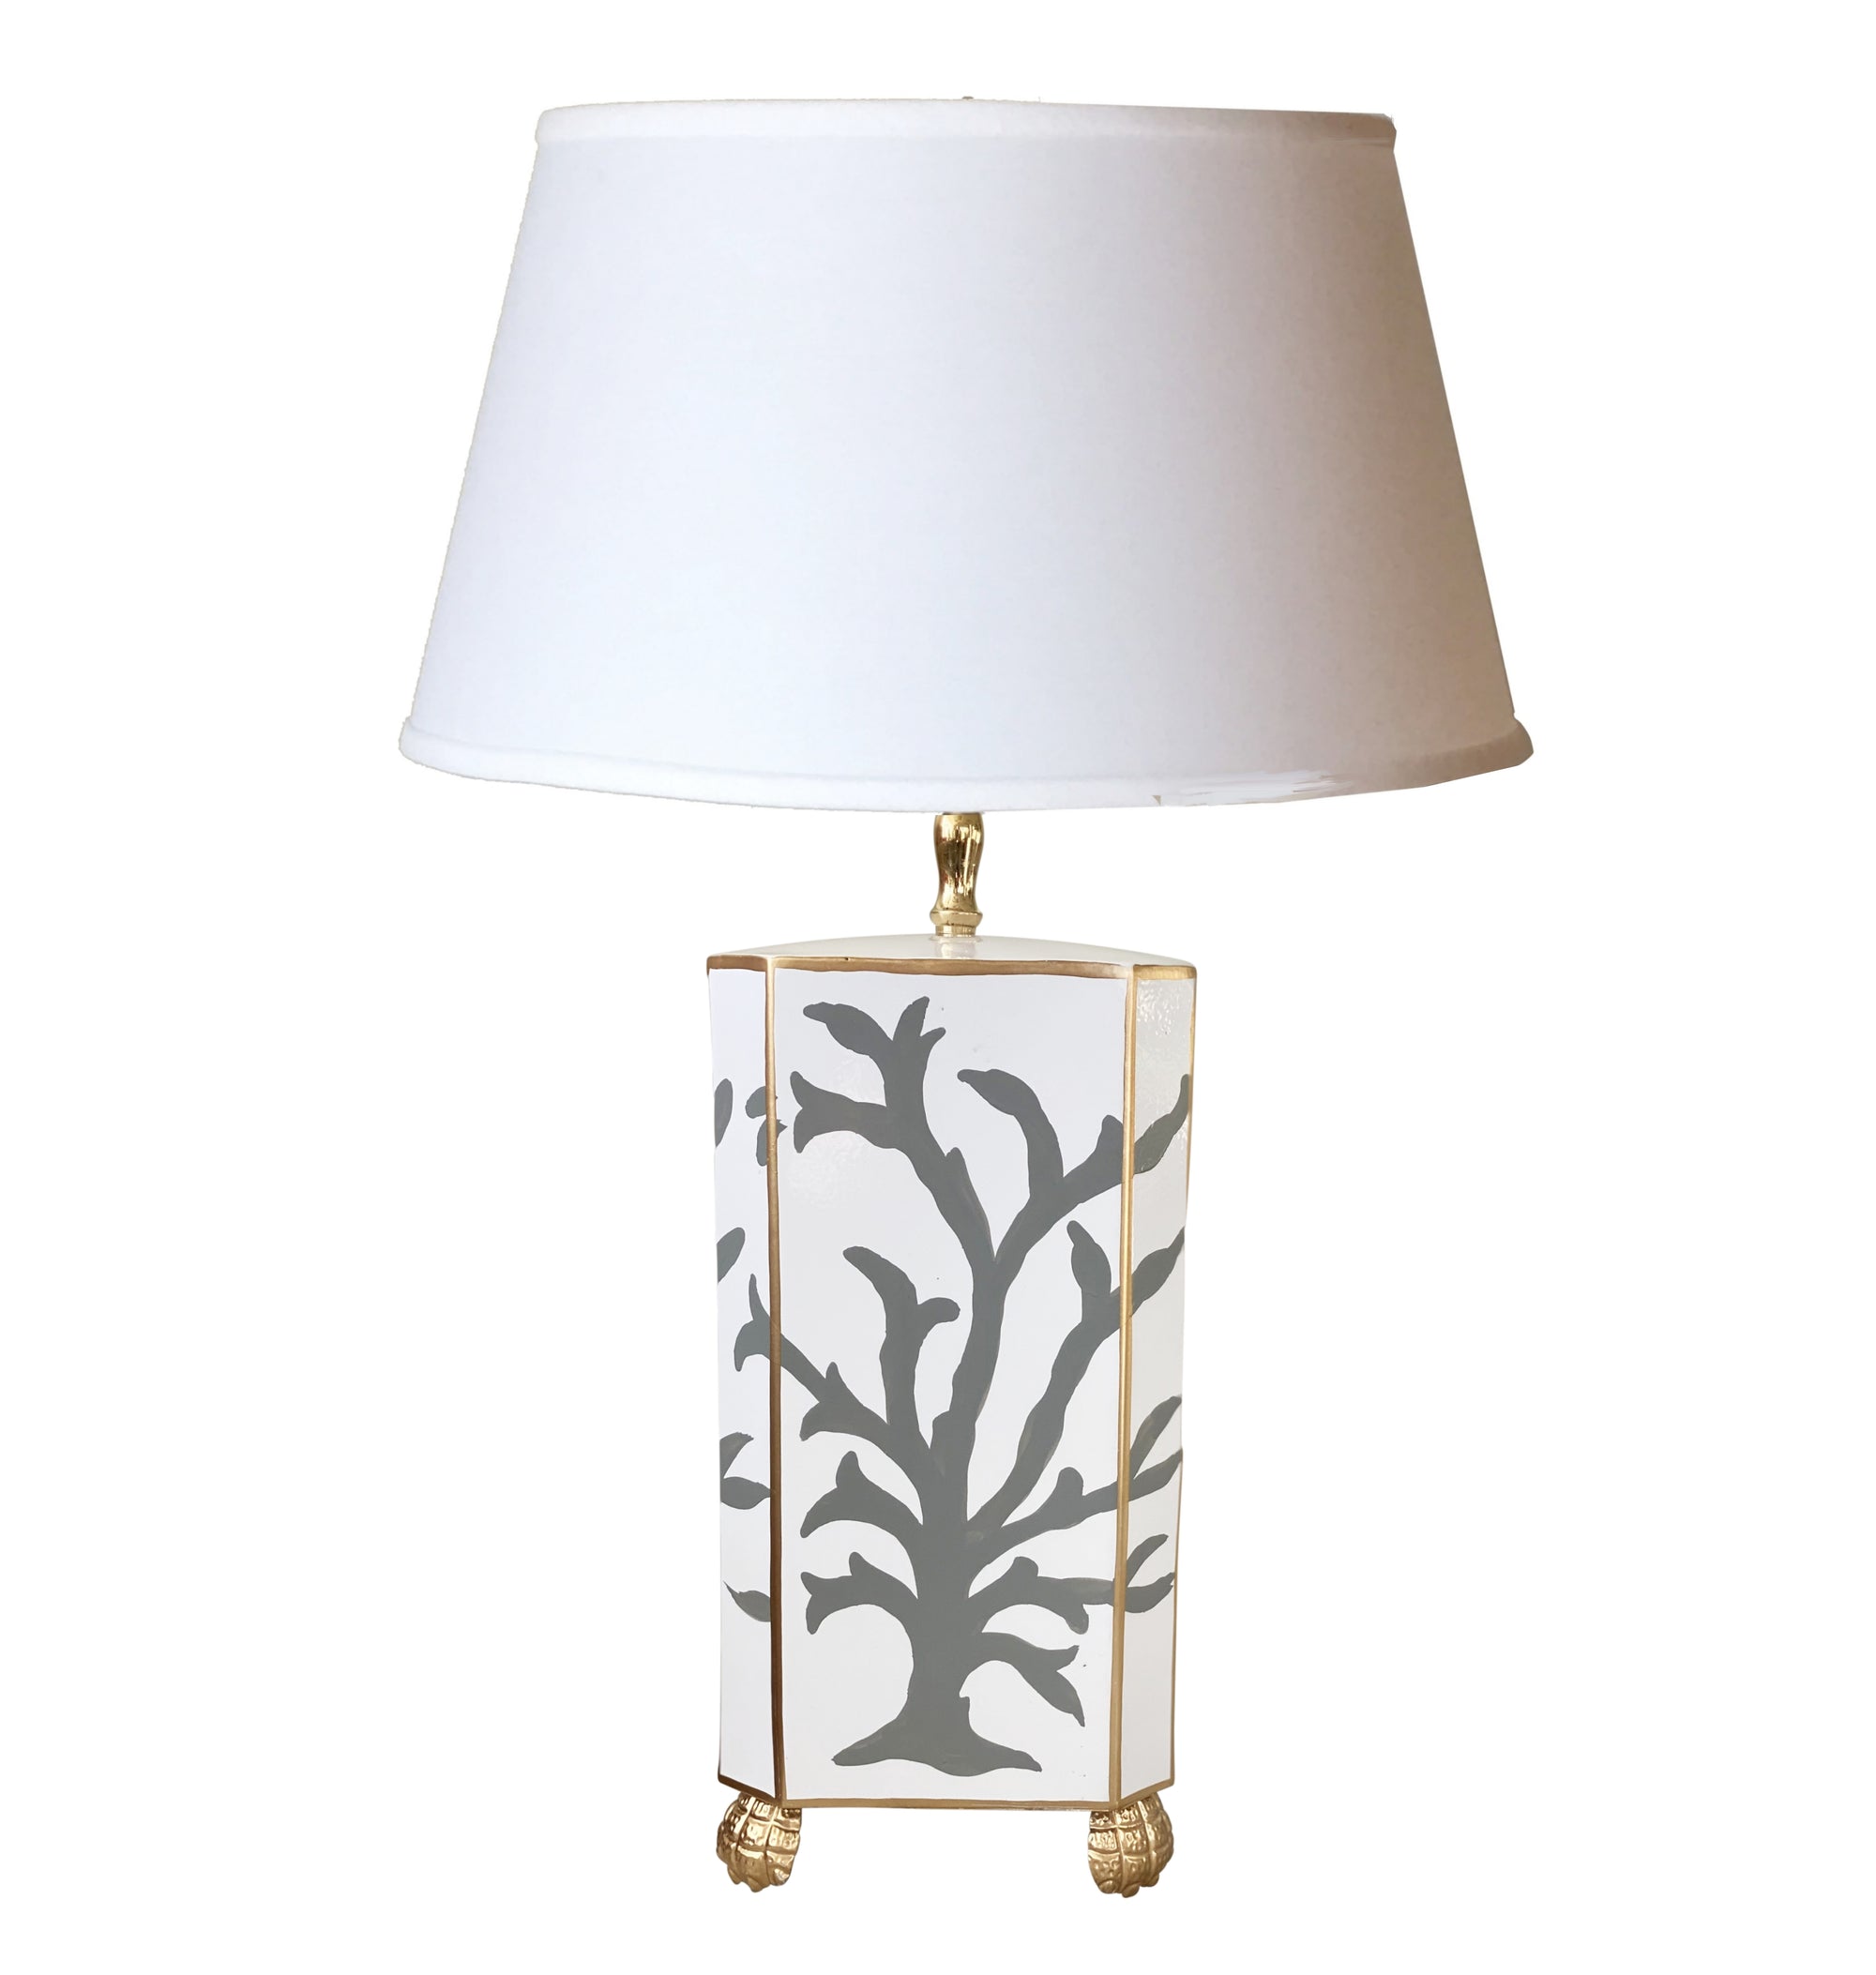 Dana Gibson Grey Coral Table Lamp